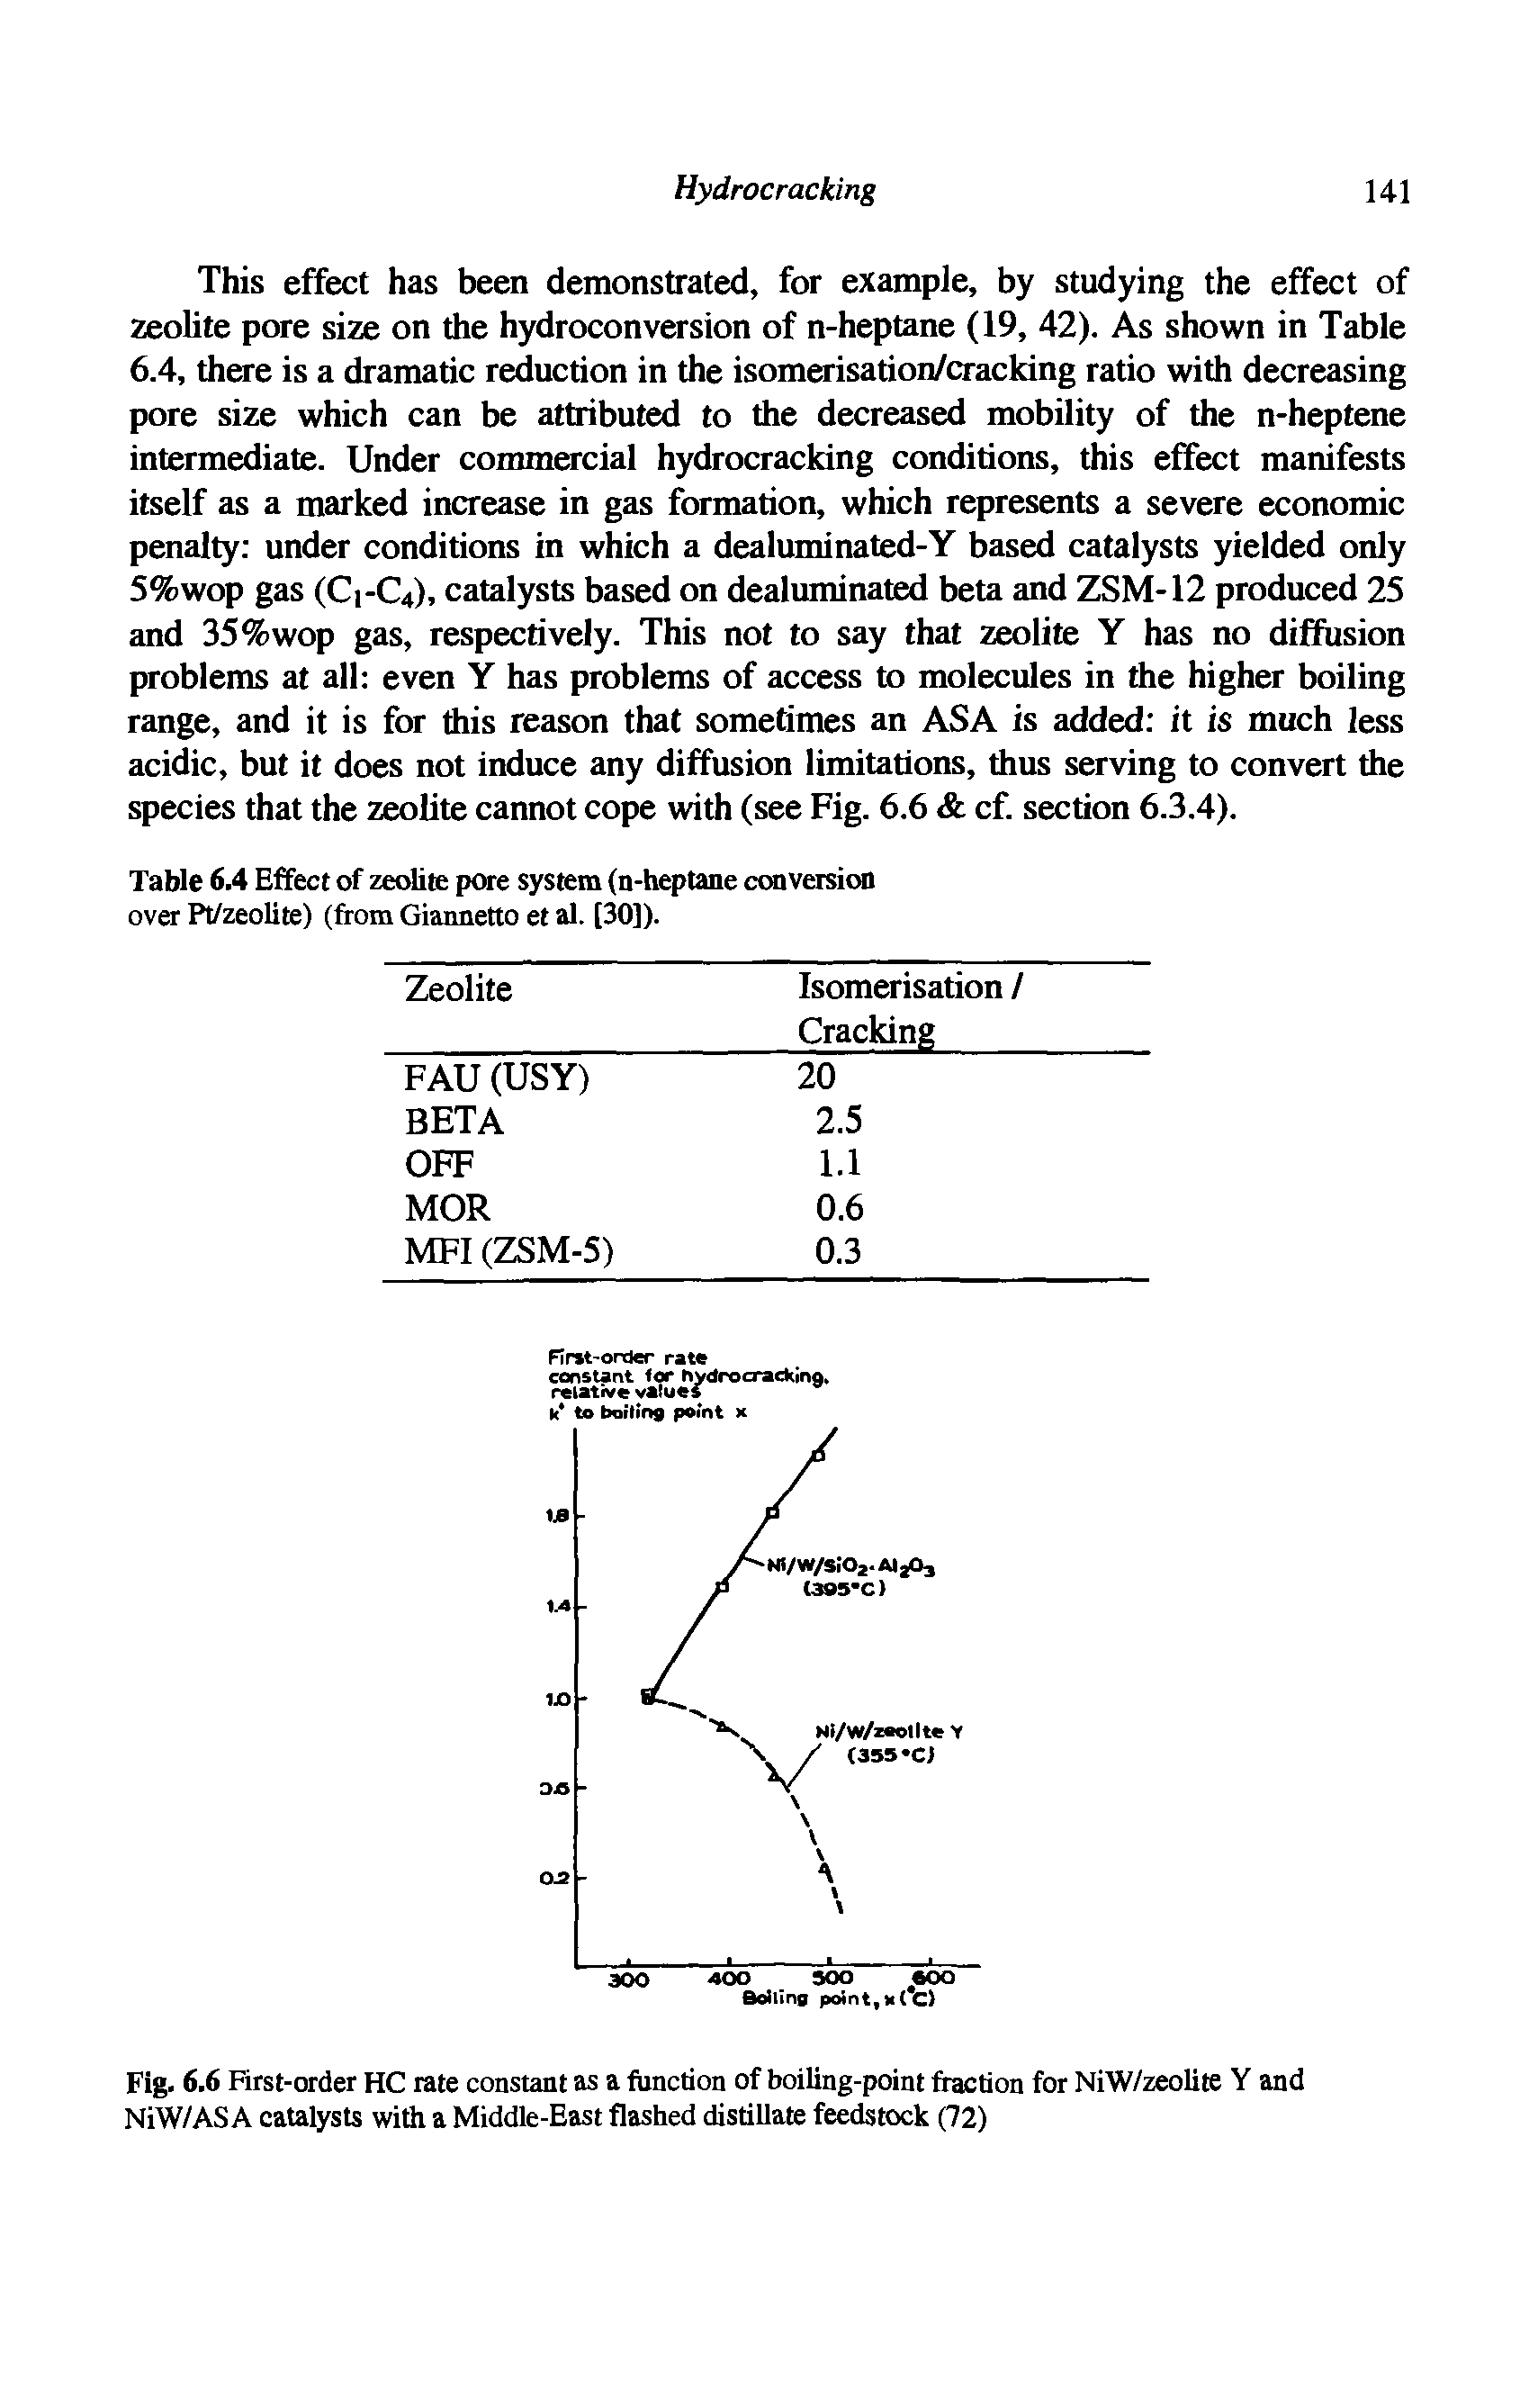 Table 6.4 Effect of zeolite pore system (n-heptane conversion over Pt/zeolite) (from Giannetto et al. [30]).